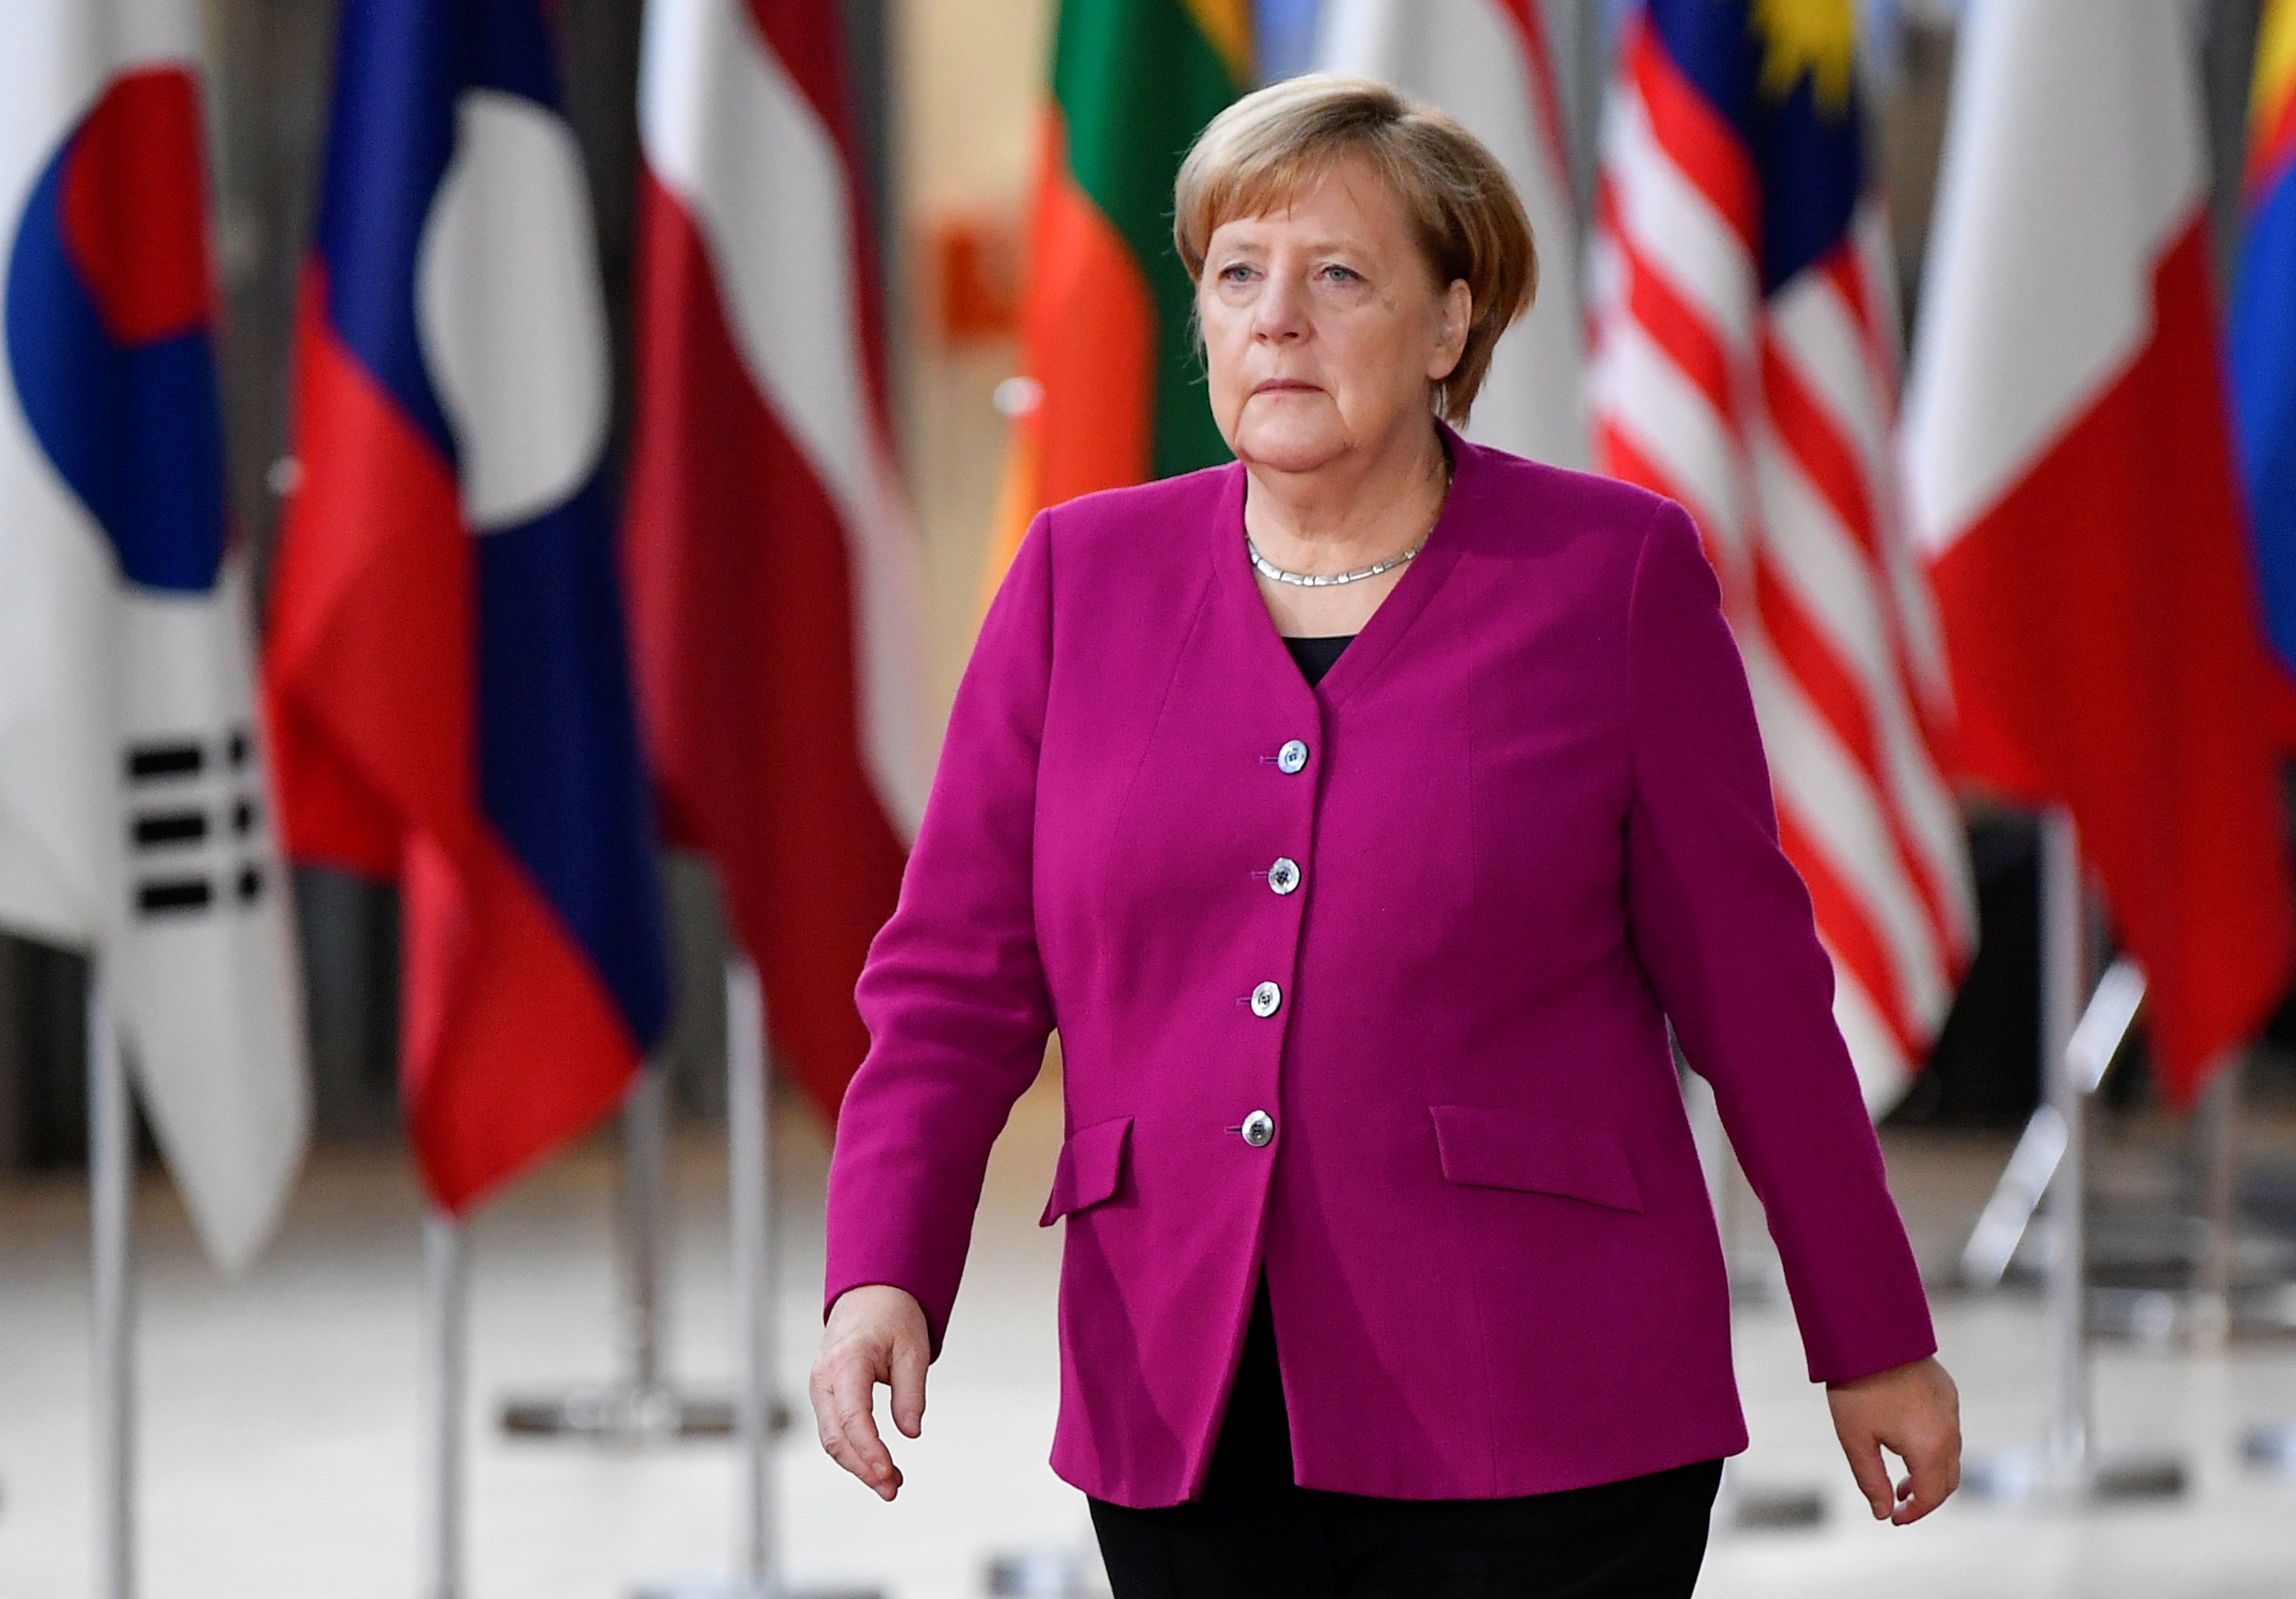 Merkel no se presentará a reelección como presidenta de su partido: Medios